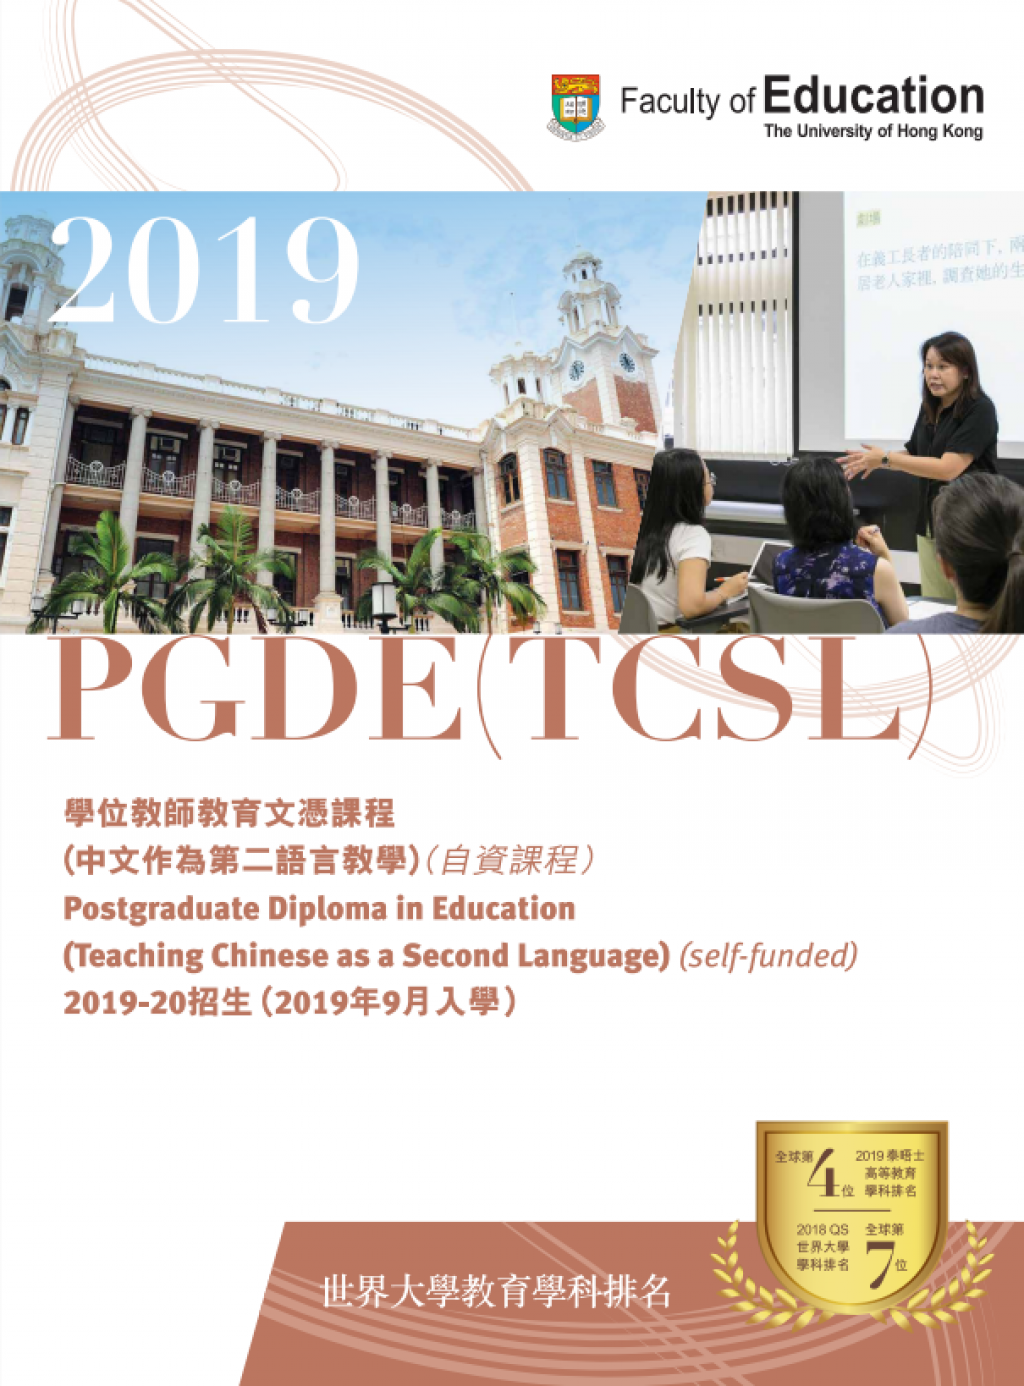 PGDE(TCSL) (self-funded) Intake - Deadline extended to Feb 28 2019